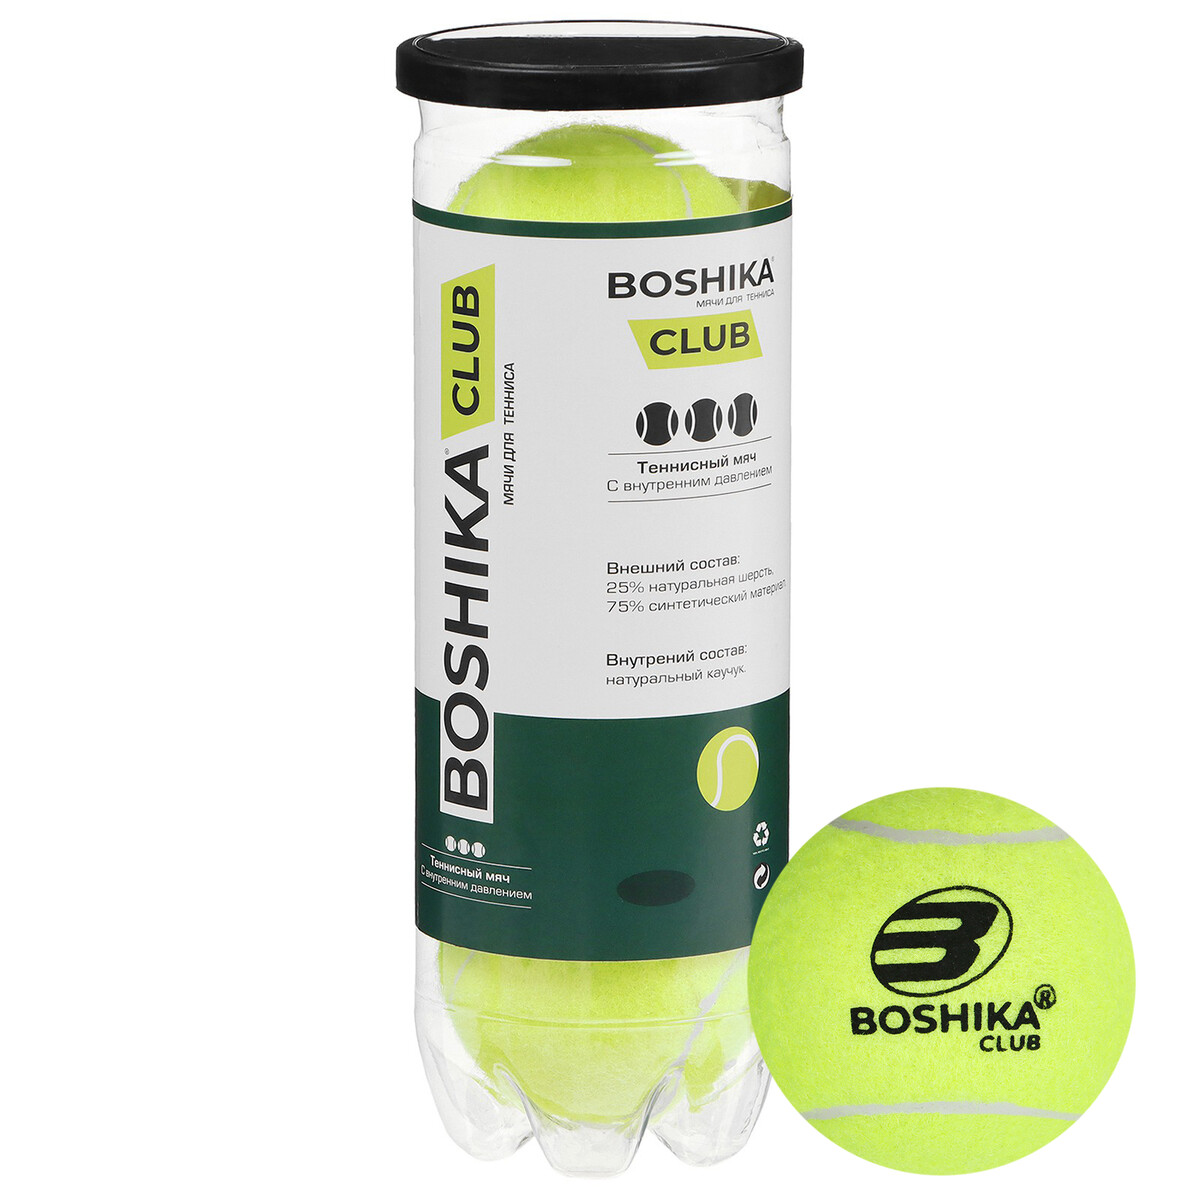 Набор мячей для большого тенниса boshika, тренировочный, 3 шт. набор мячей для настольного тенниса boshika expert 3 d 40 мм 6 шт белый